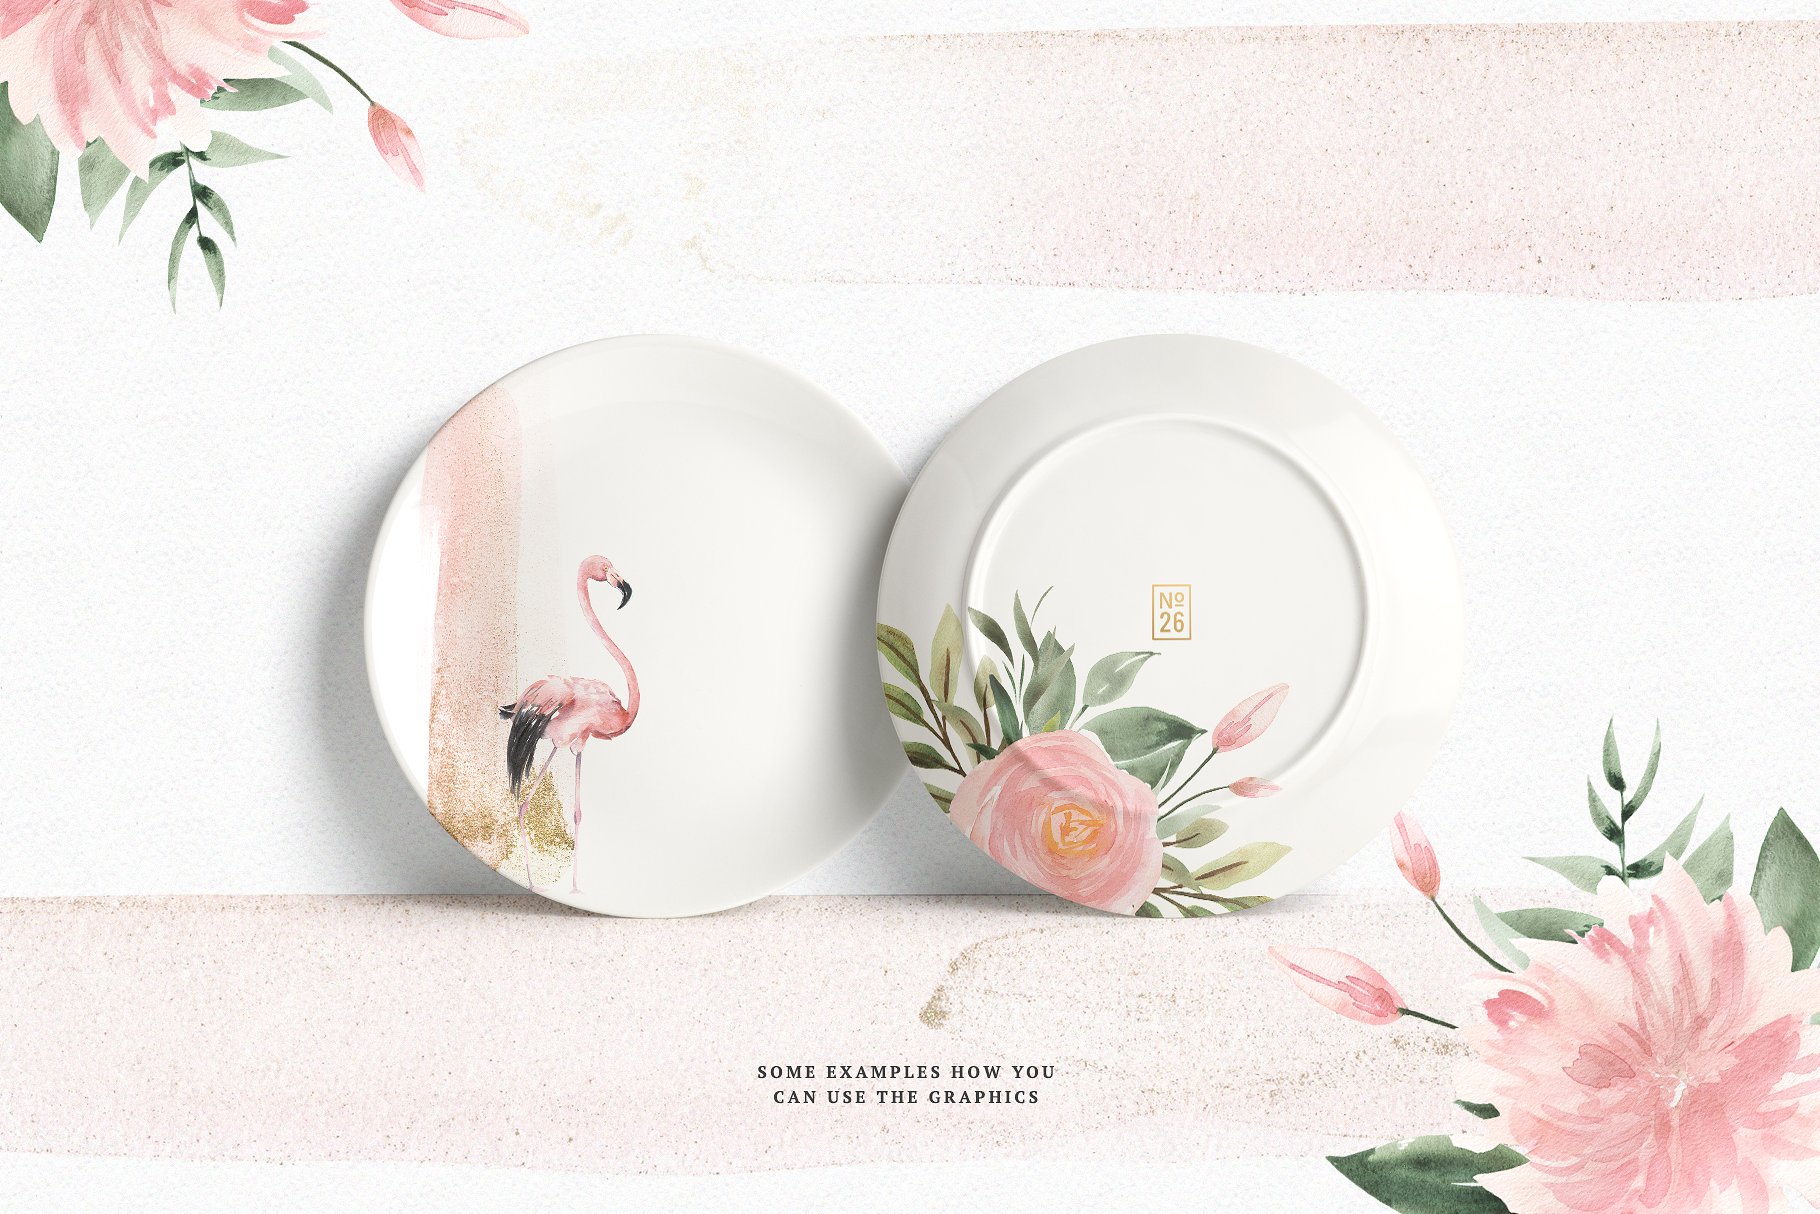 火烈鸟与鲜花矢量水彩插画 Watercolor Flamingo & Flowers插图11